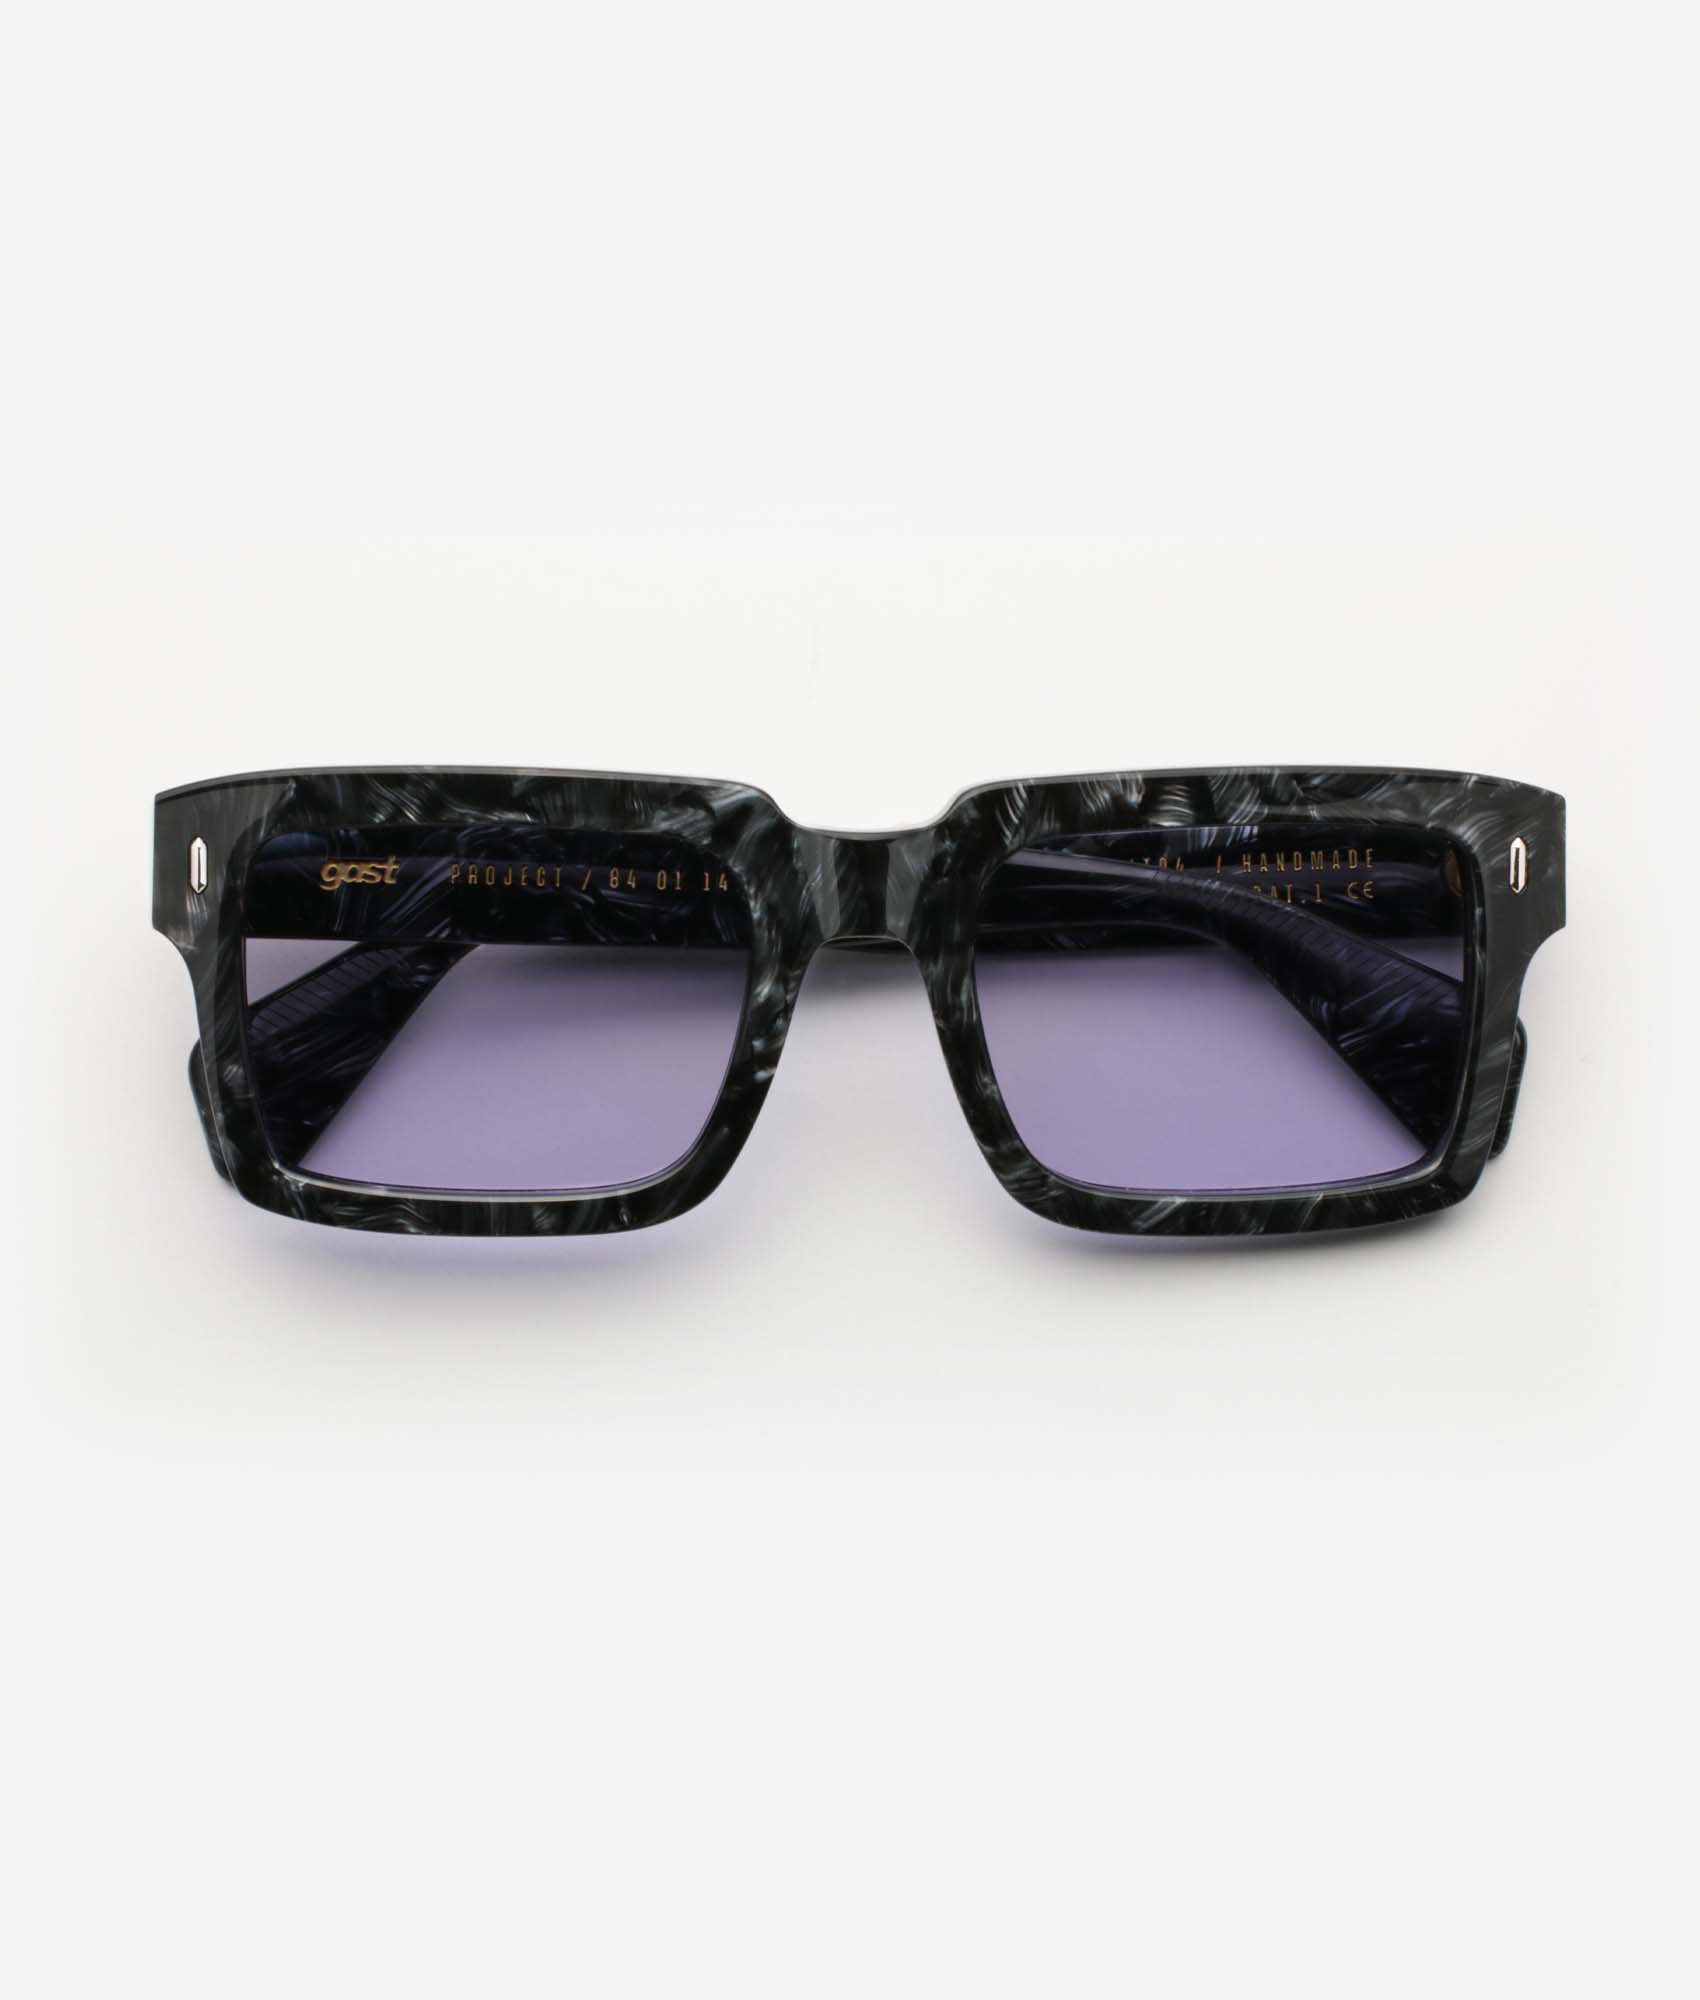 Loot Black Pearl Gast Sunglasses